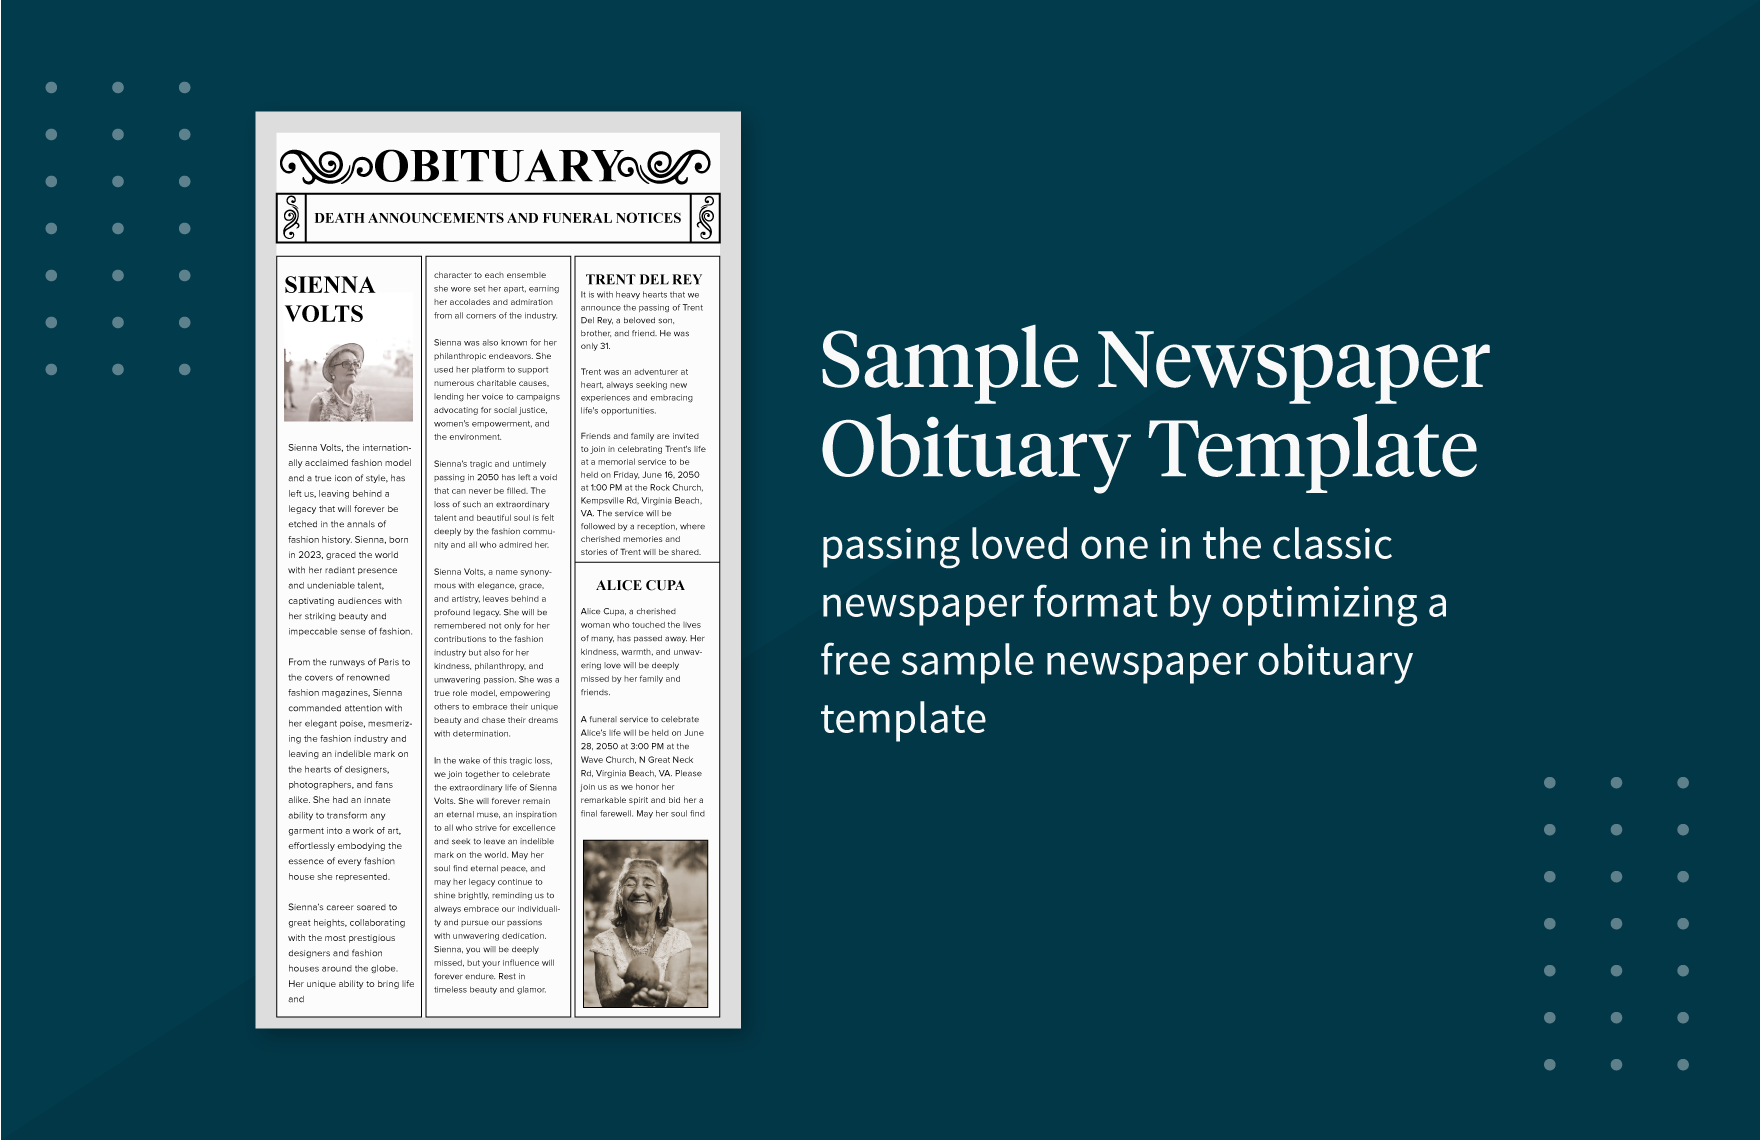 Sample Newspaper Obituary Template